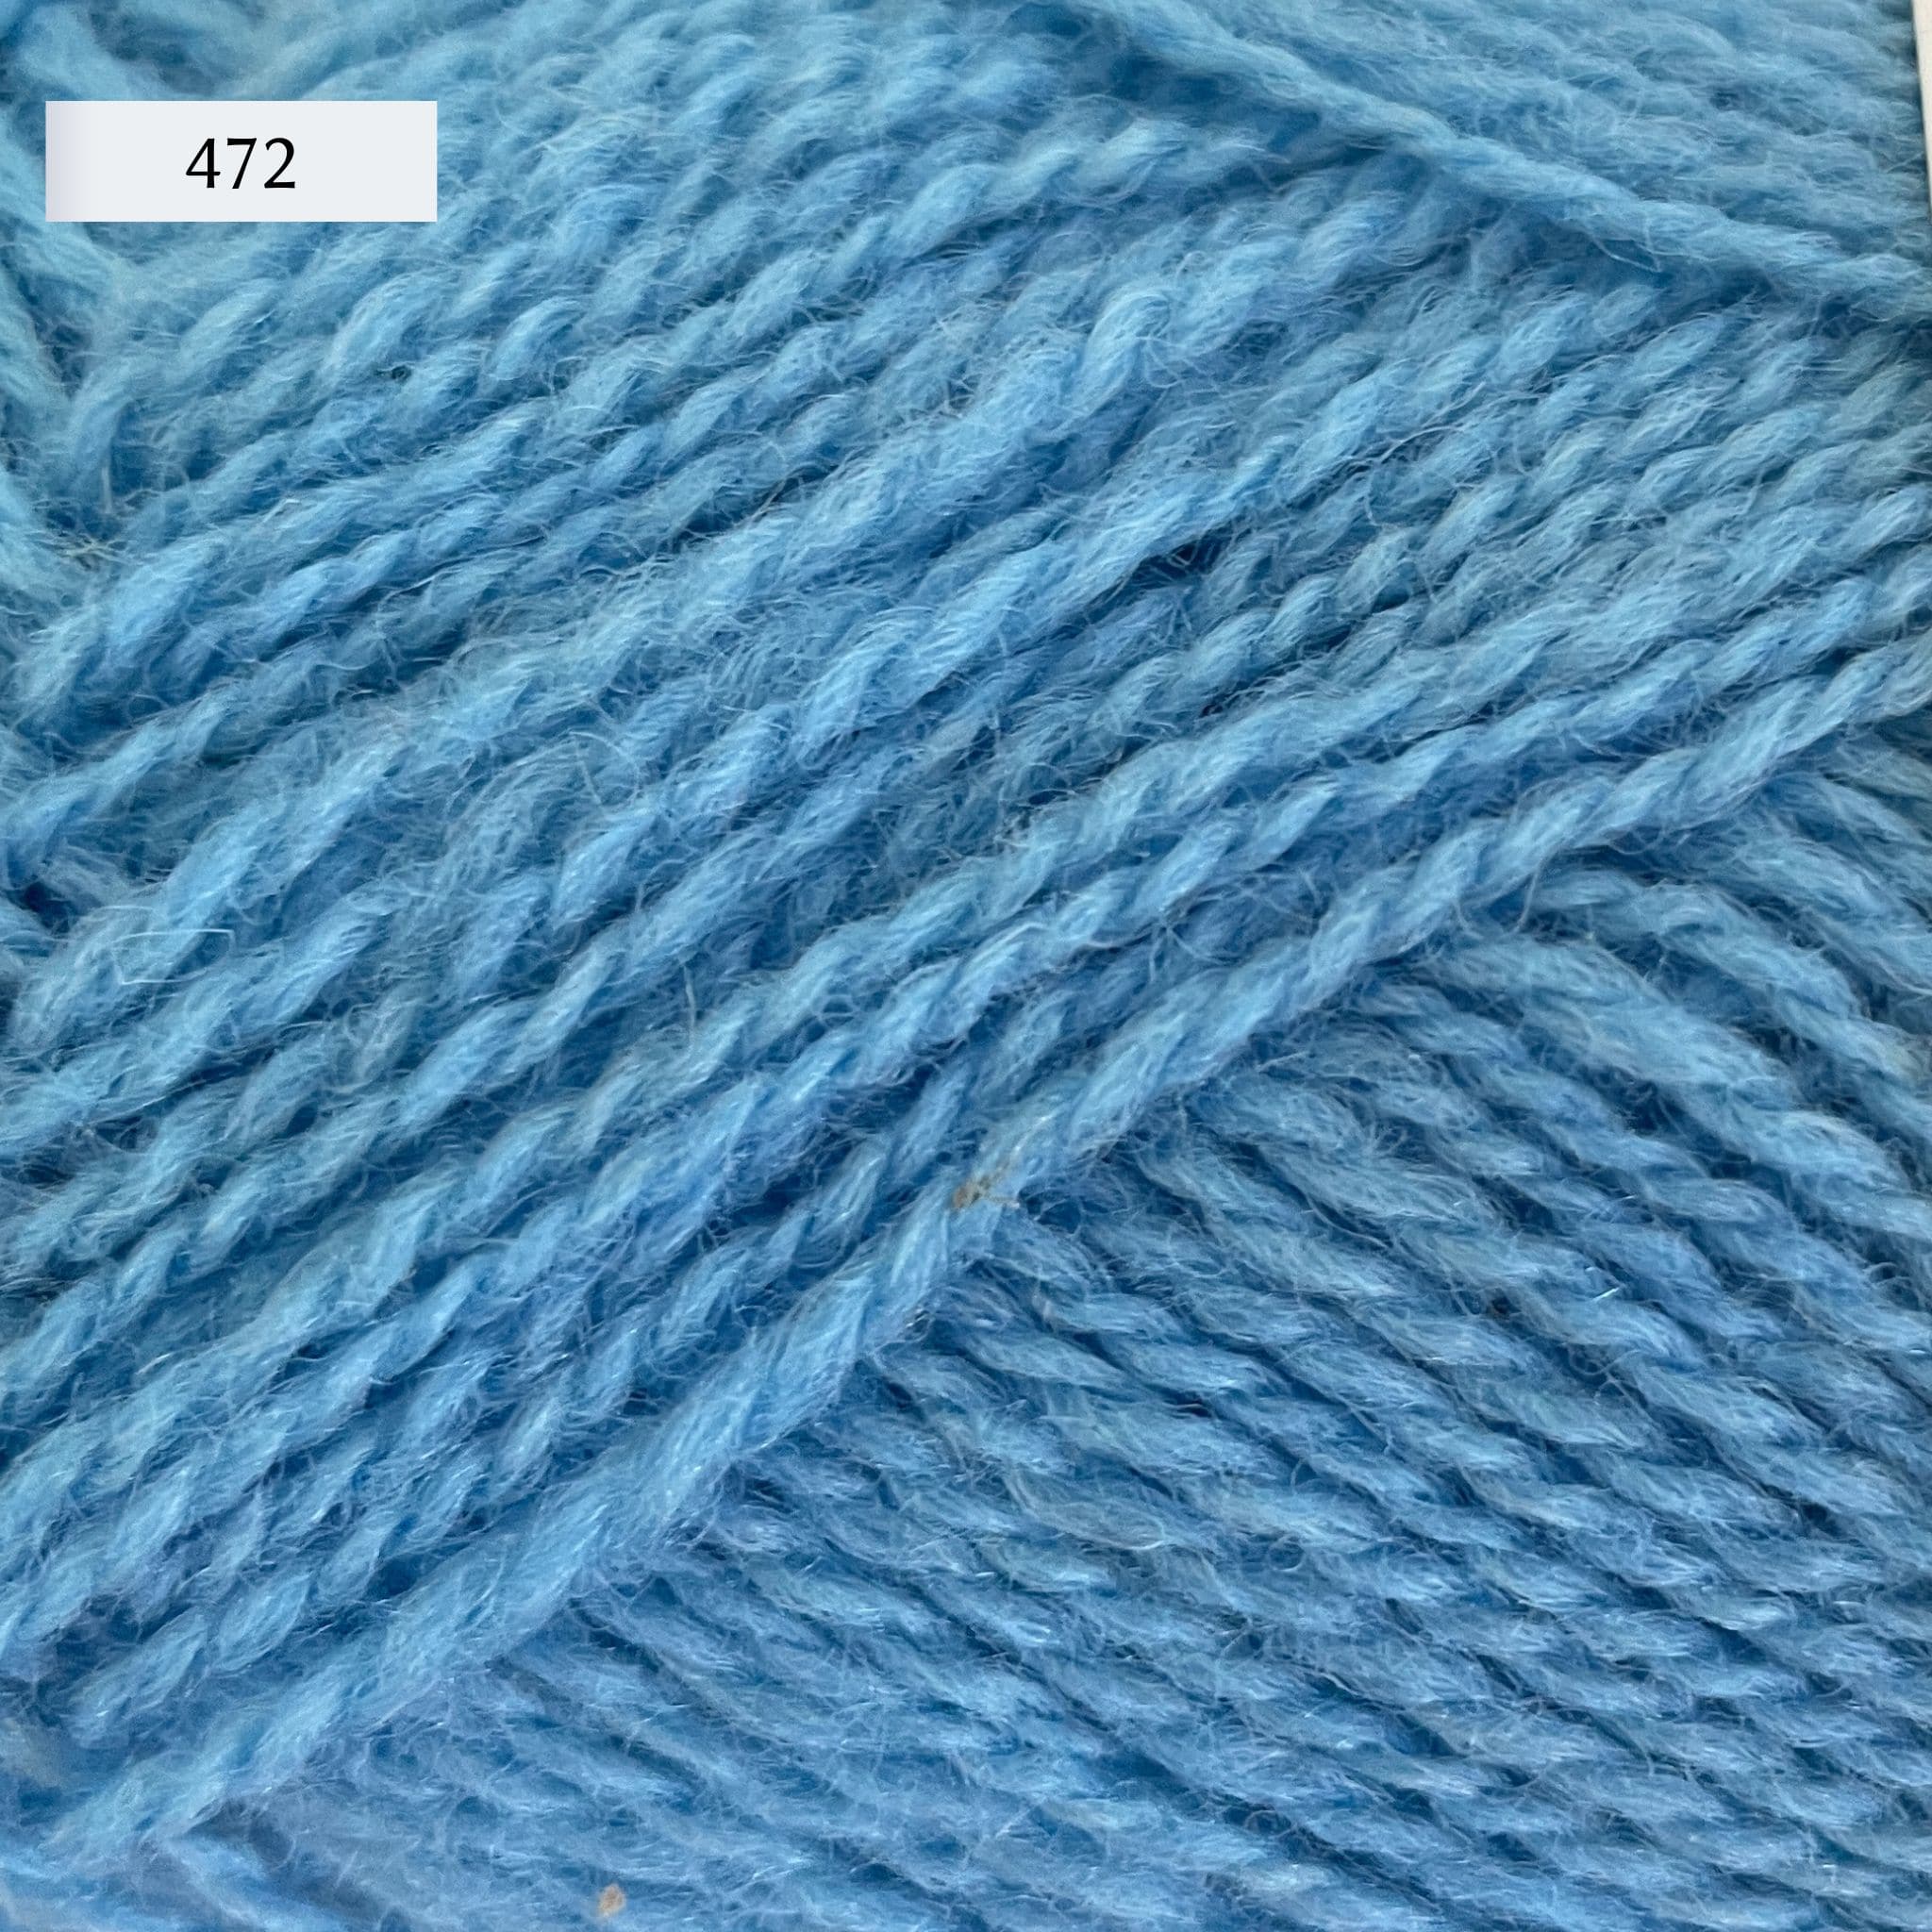 Rauma Finullgarn, a fingering/sport weight yarn, in color 472, a light cornflower blue